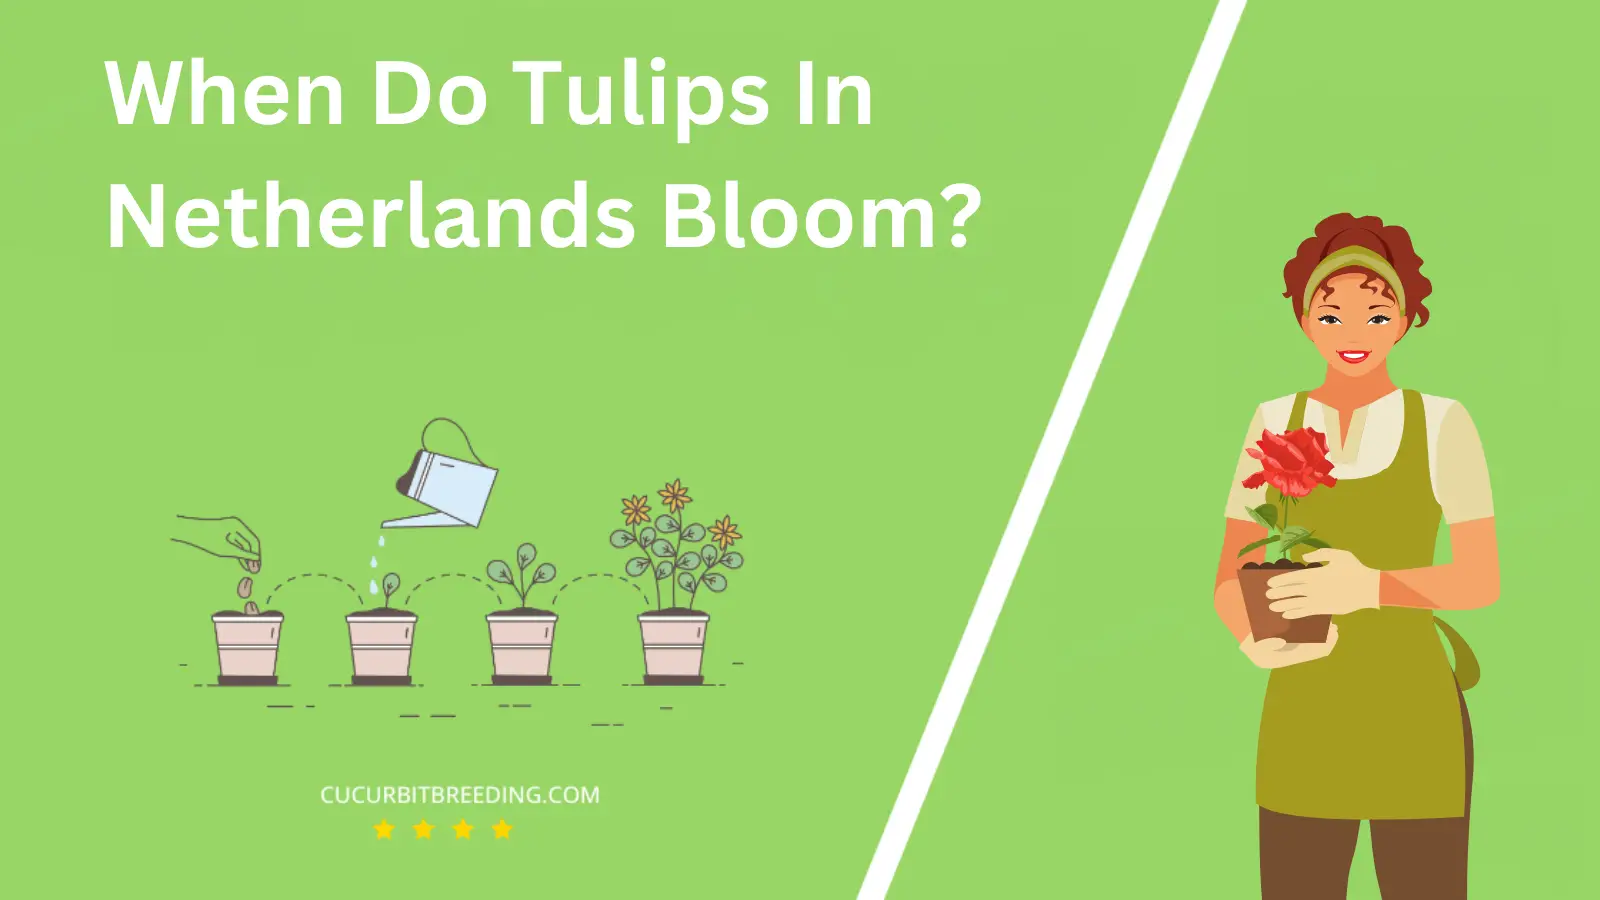 When Do Tulips In Netherlands Bloom?